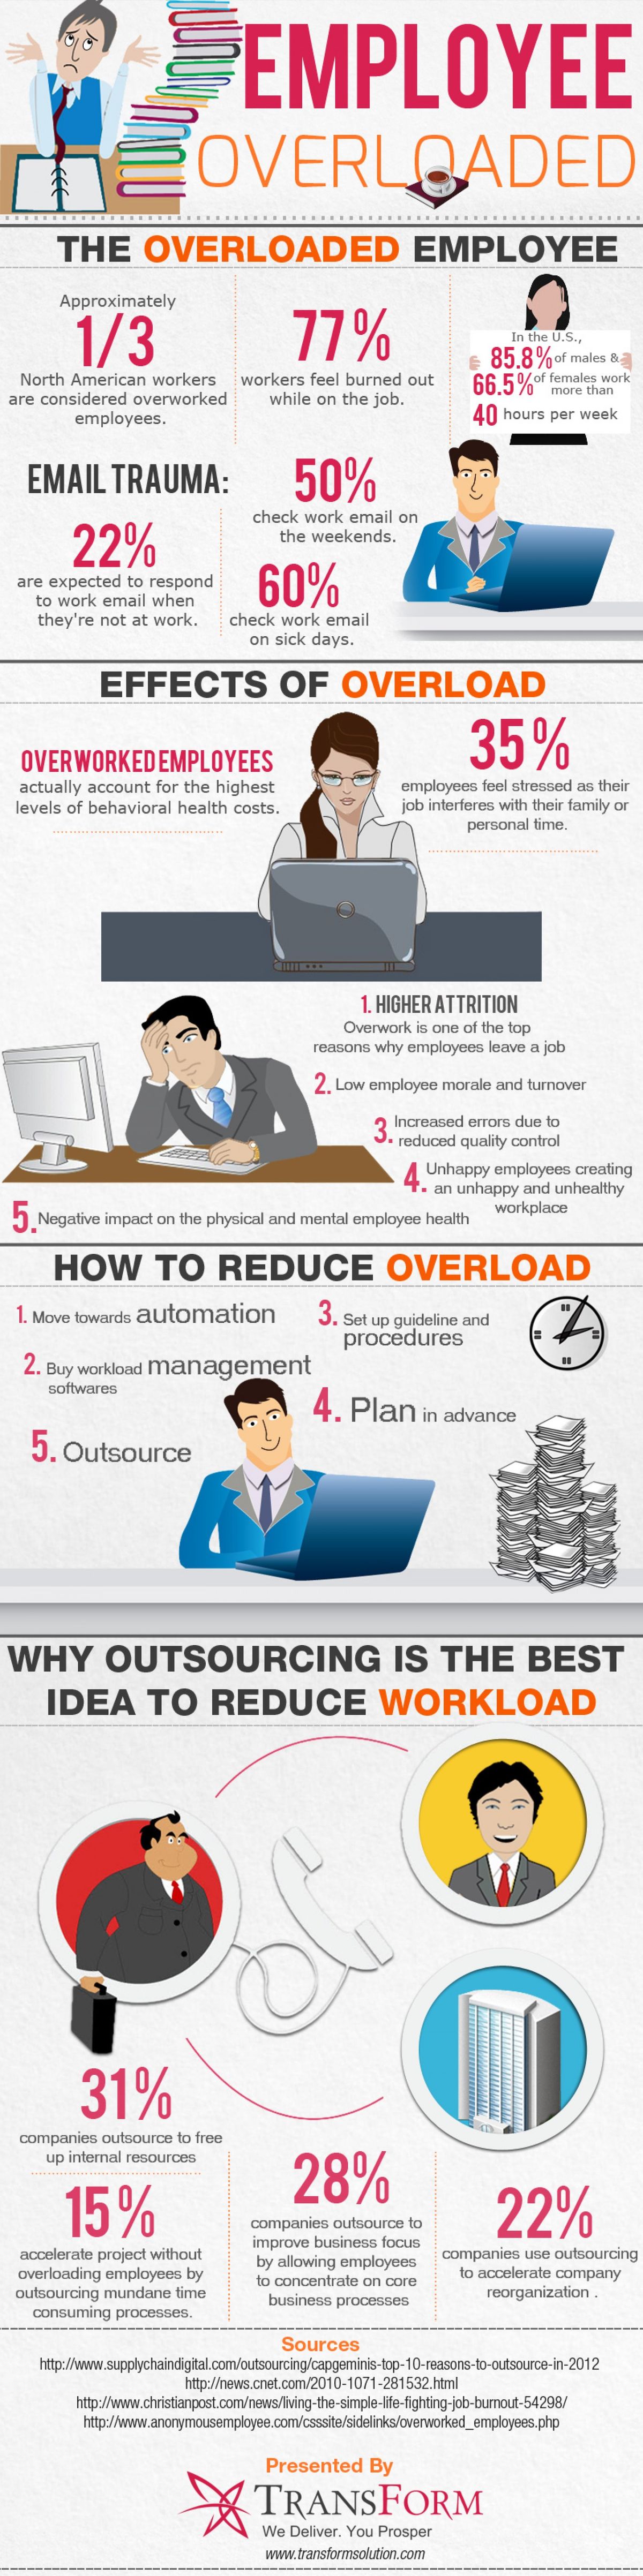 Employee Overloaded [Infographic]